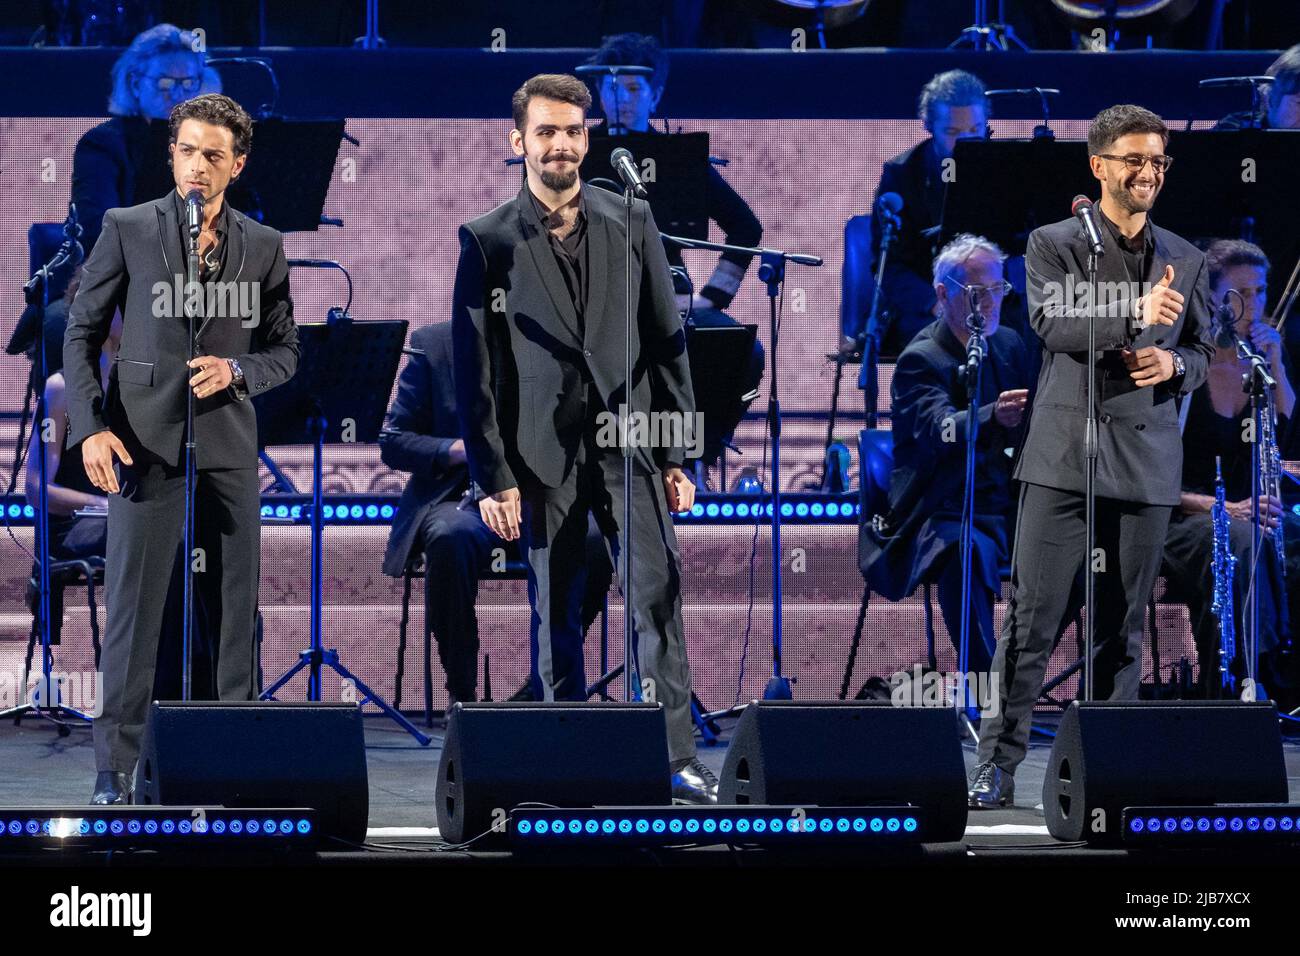 Verona, Italy. 3th June 2022. The three Italian singers of "Il Volo